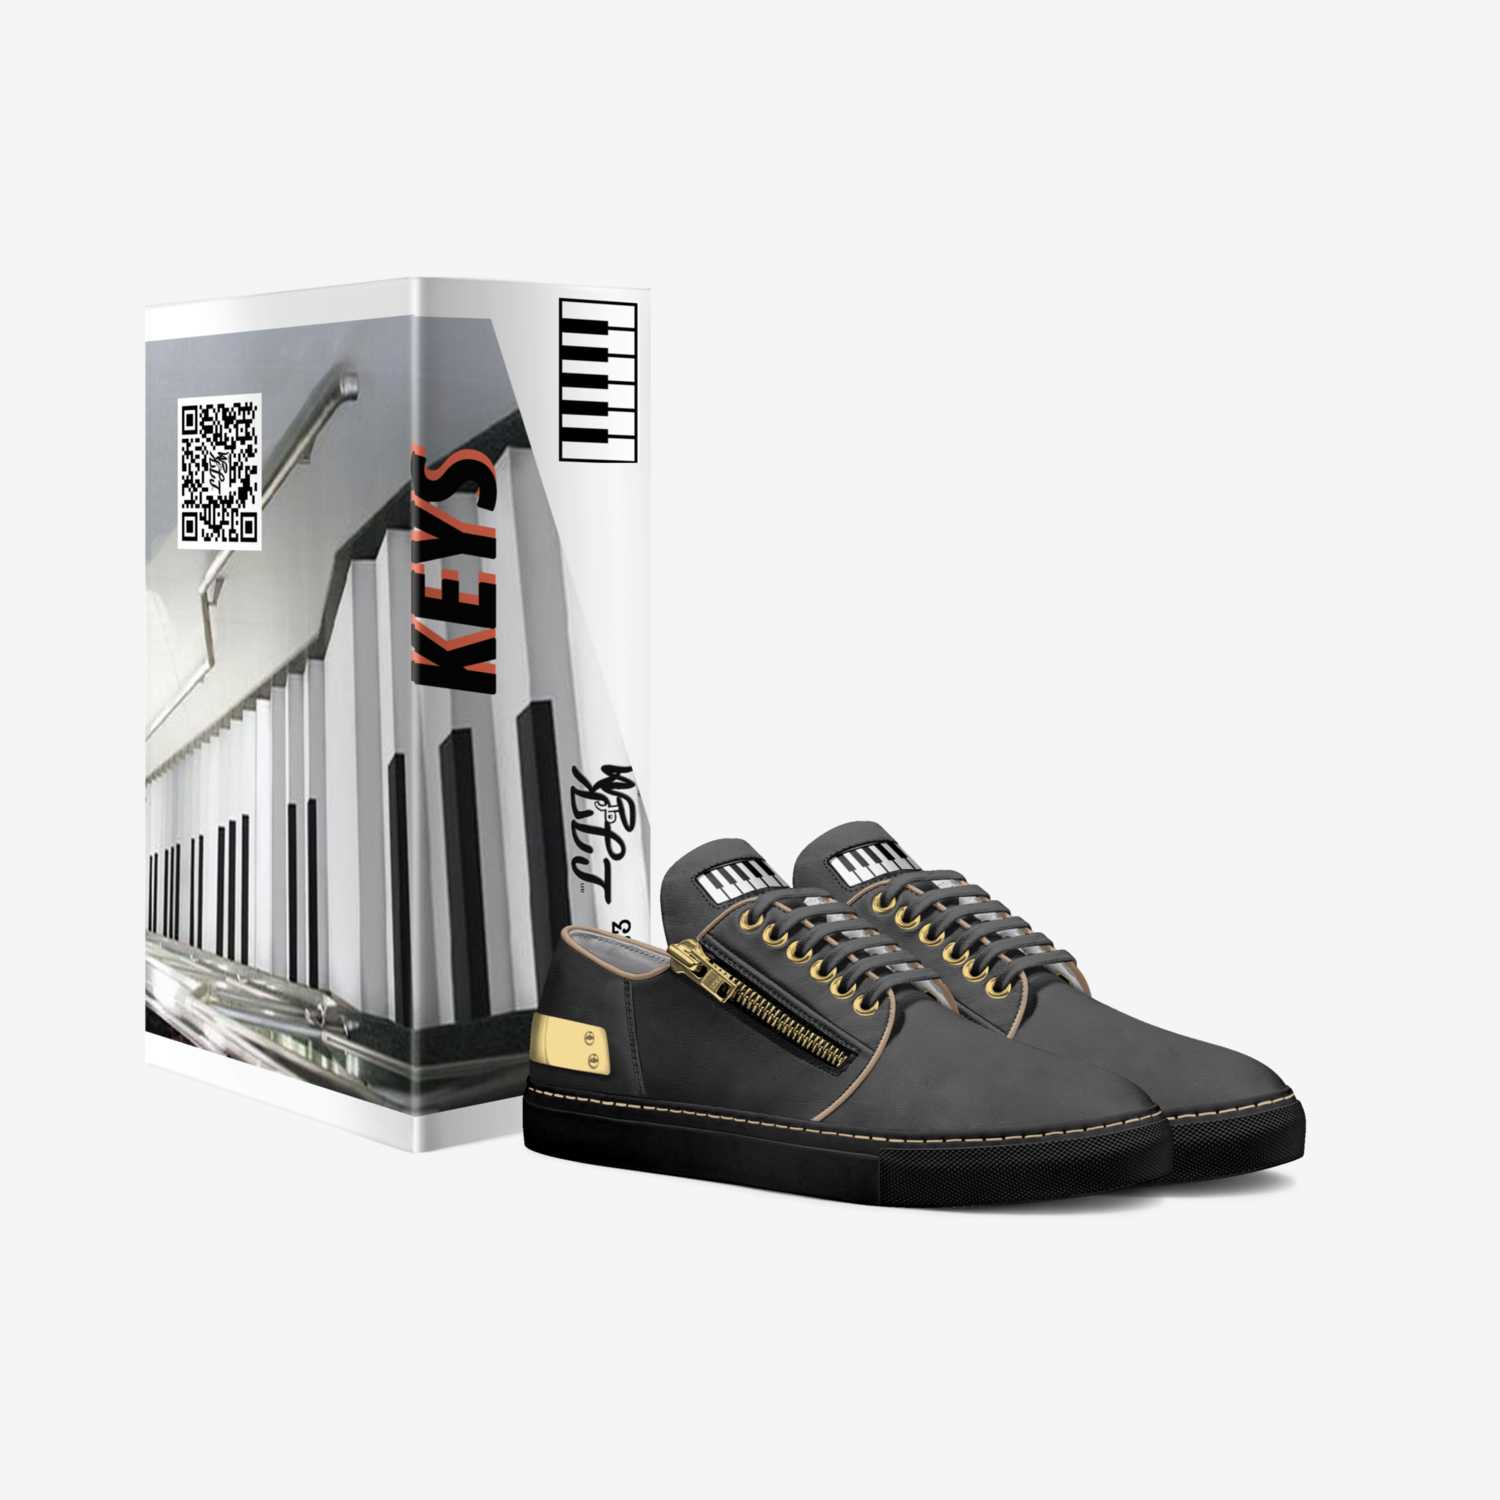 LJKofM KEYS custom made in Italy shoes by Jacqueline J Spratley | Box view